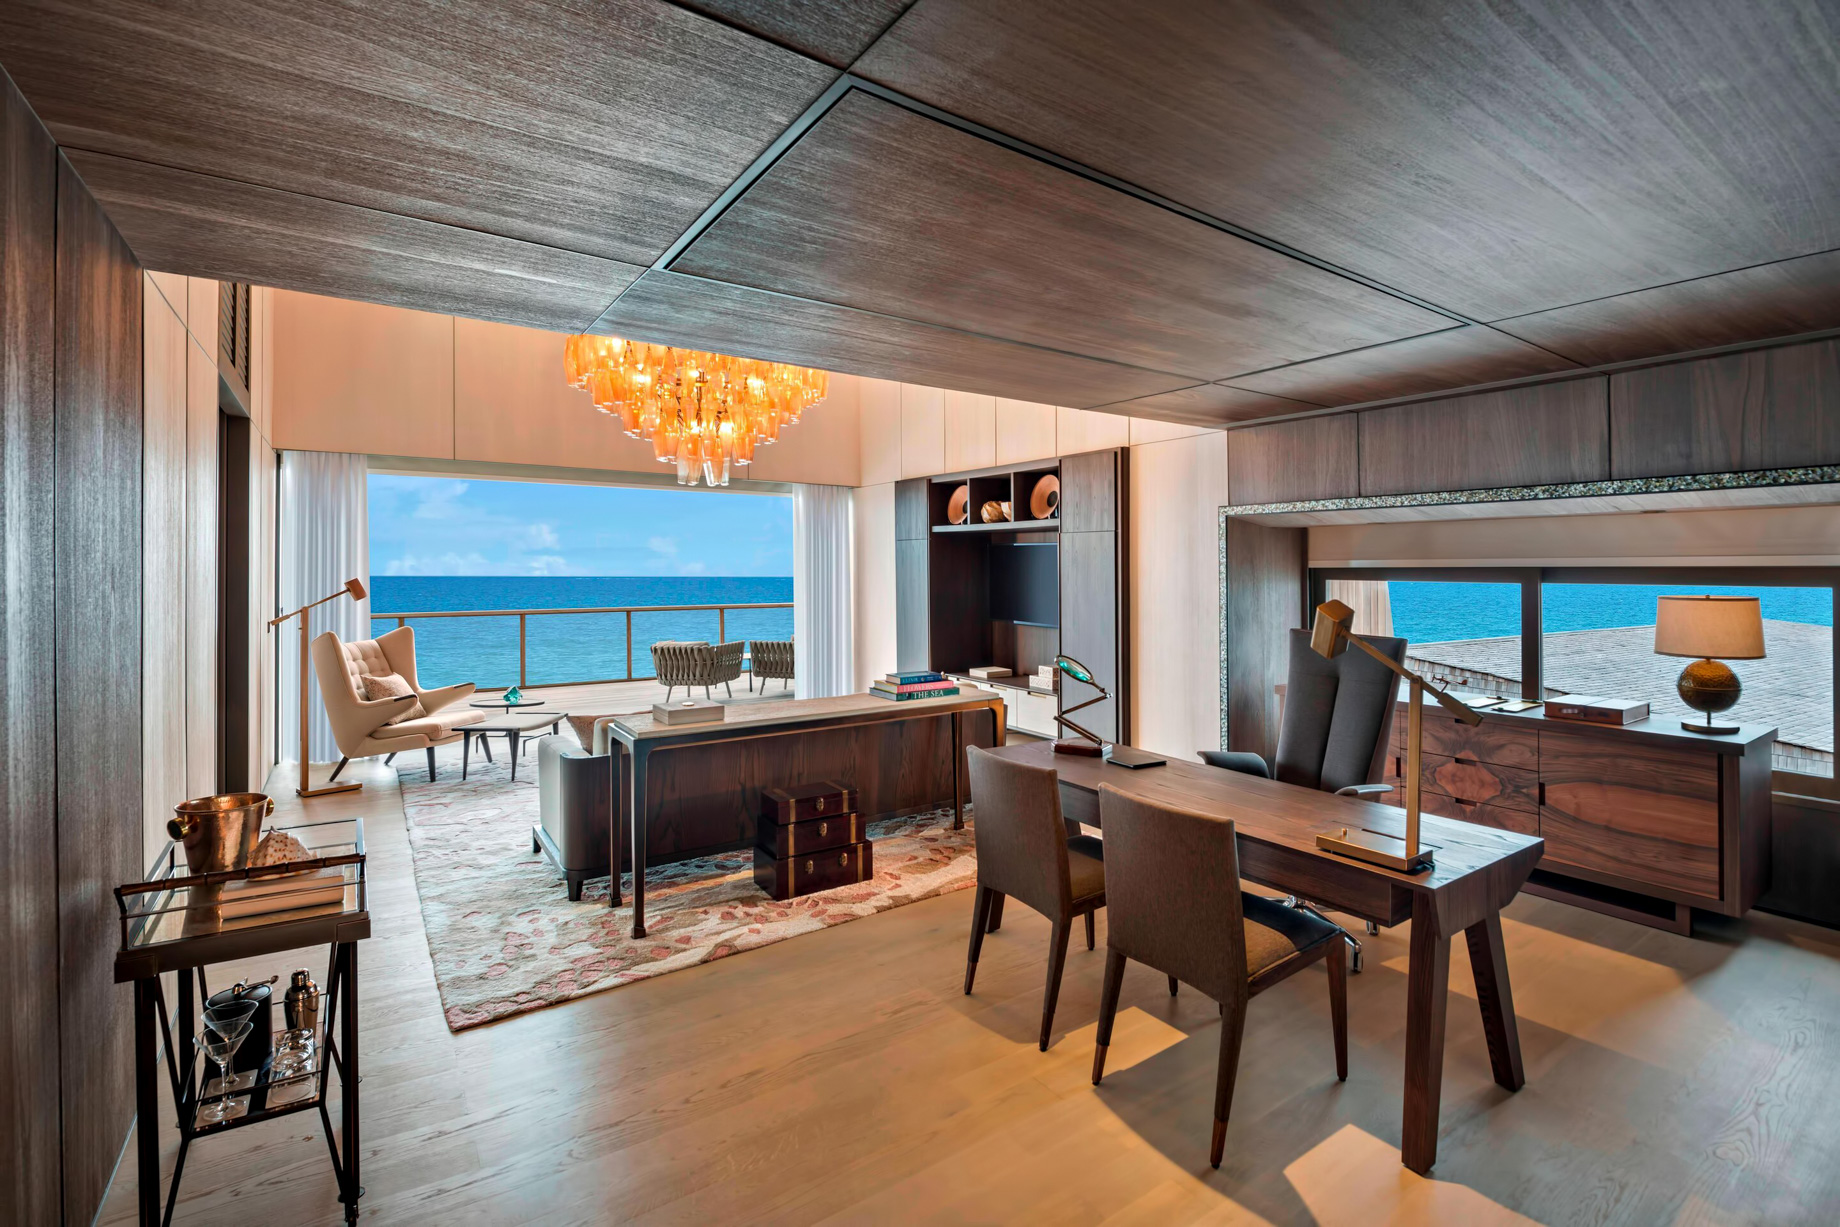 The St. Regis Maldives Vommuli Resort – Dhaalu Atoll, Maldives – John Jacob Astor Estate Suite